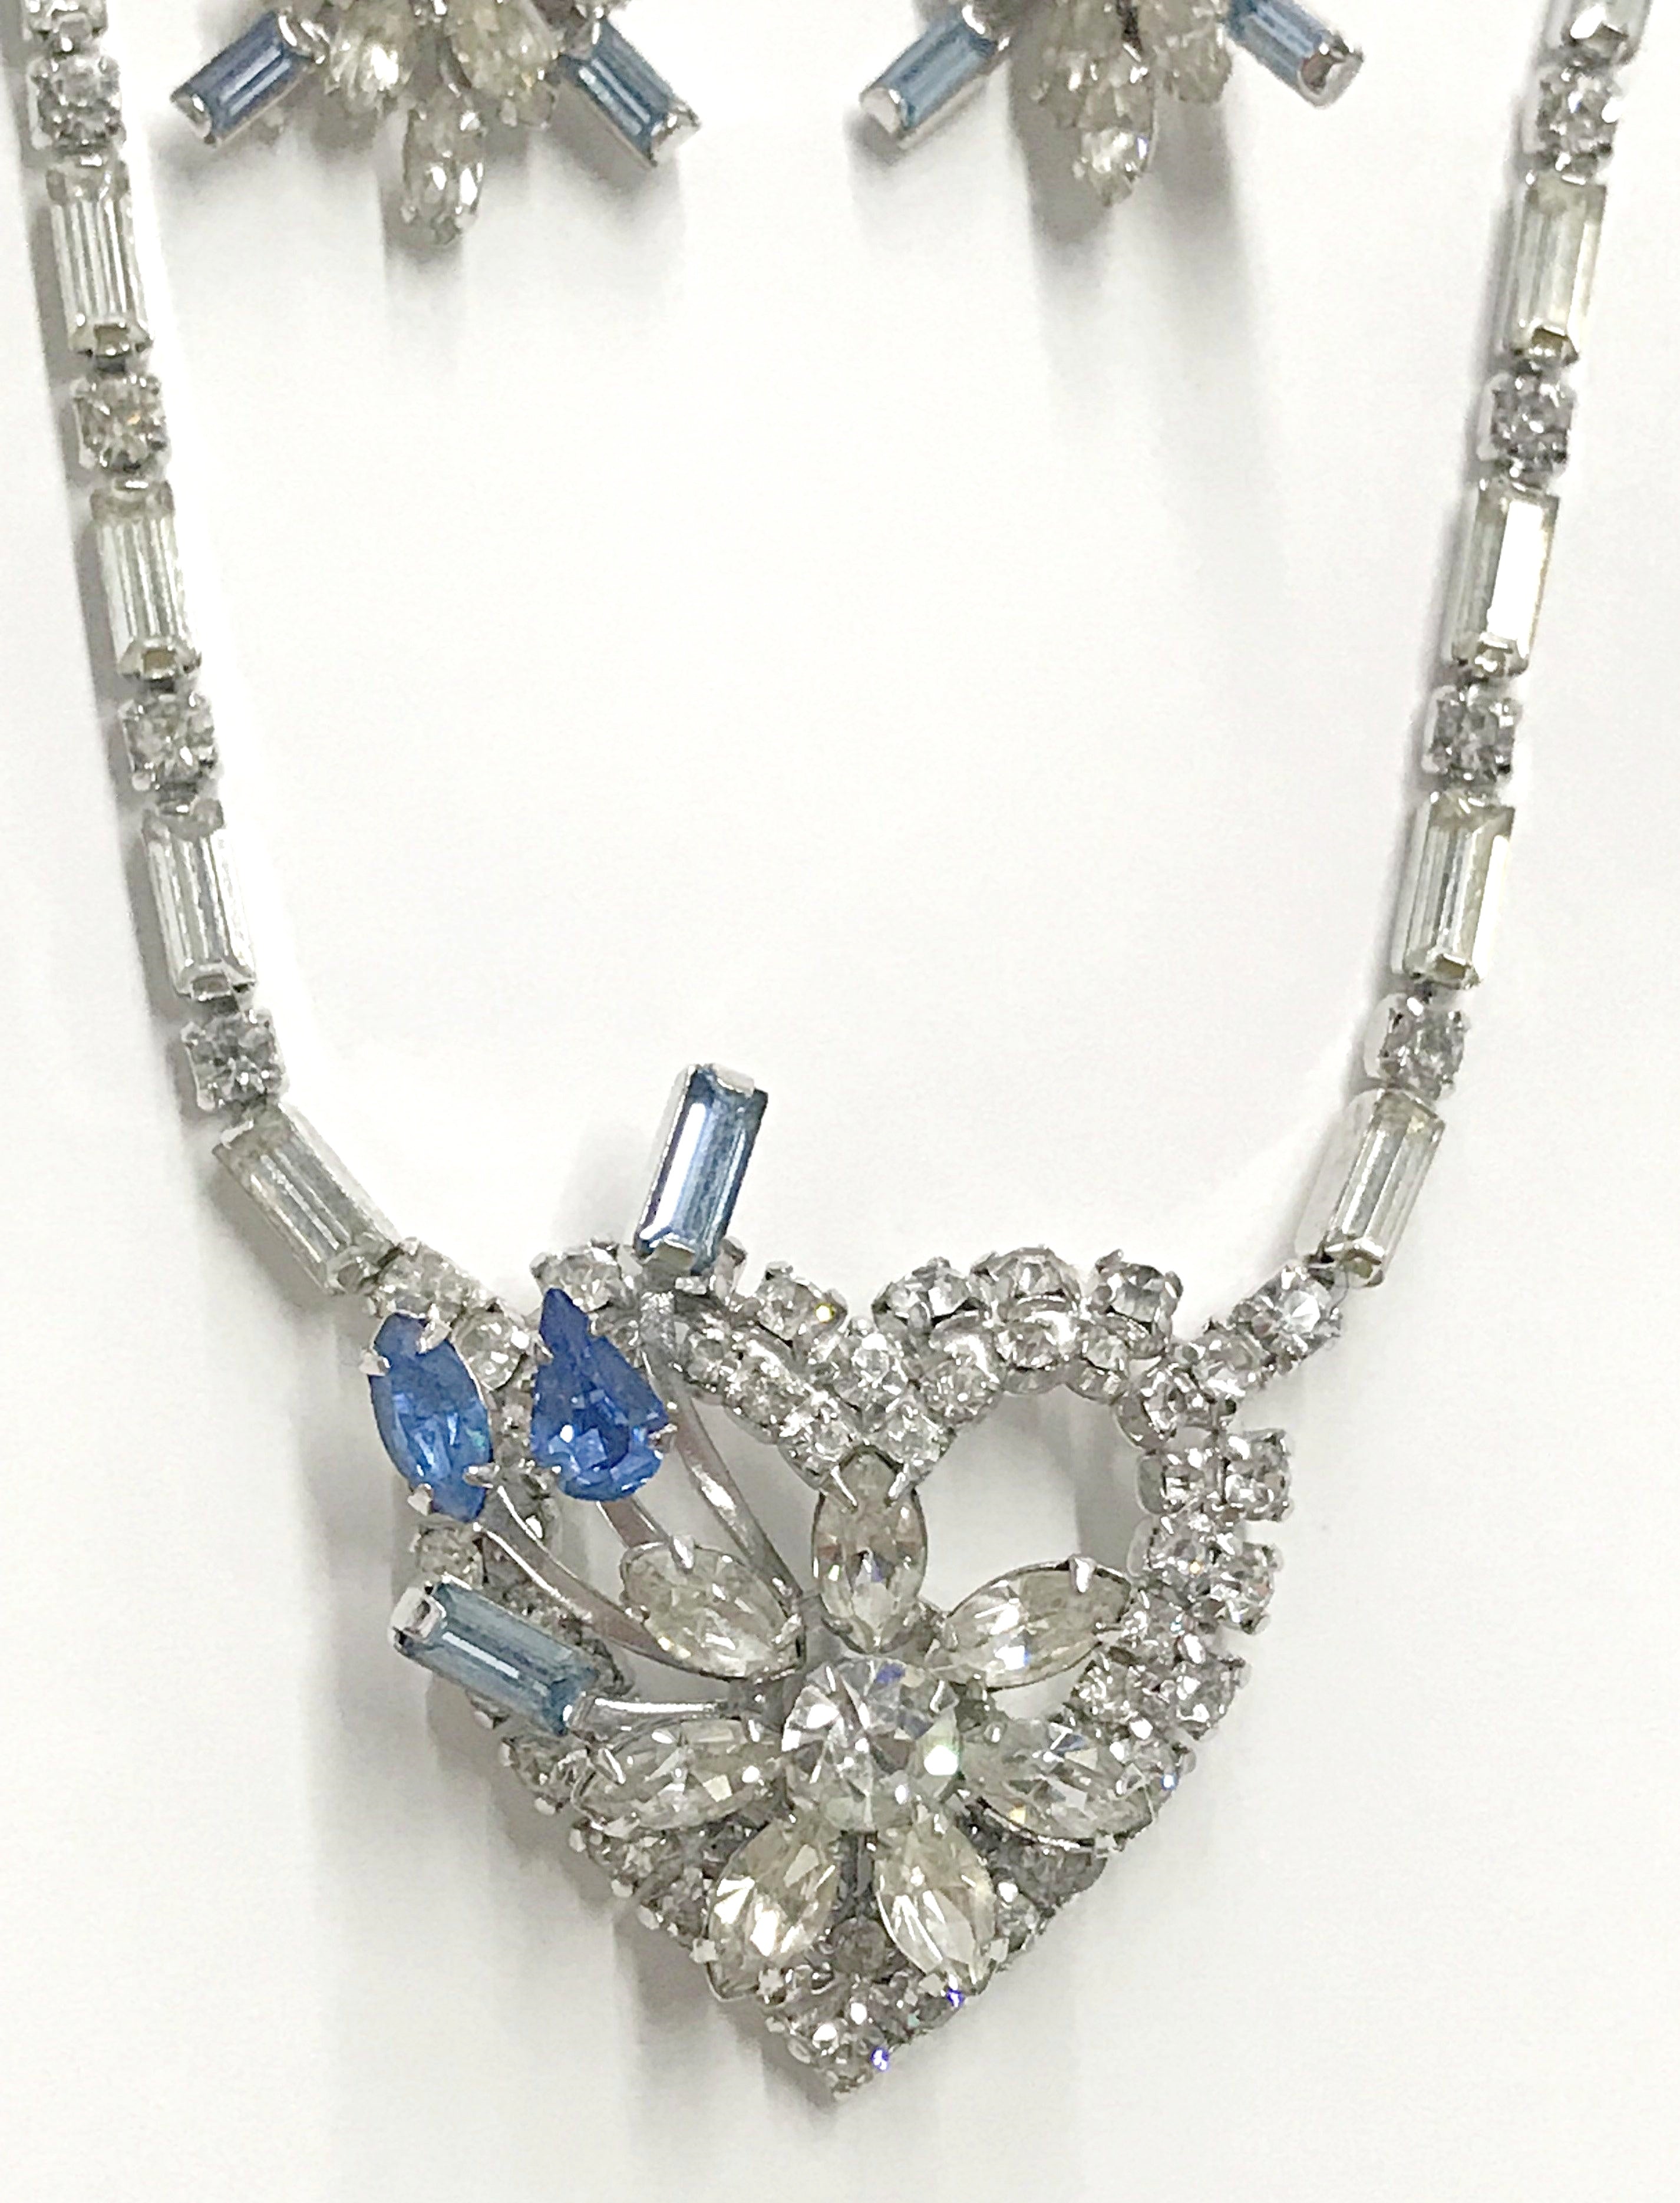 1950s Rhinestone Necklace Light Blue Teardrops